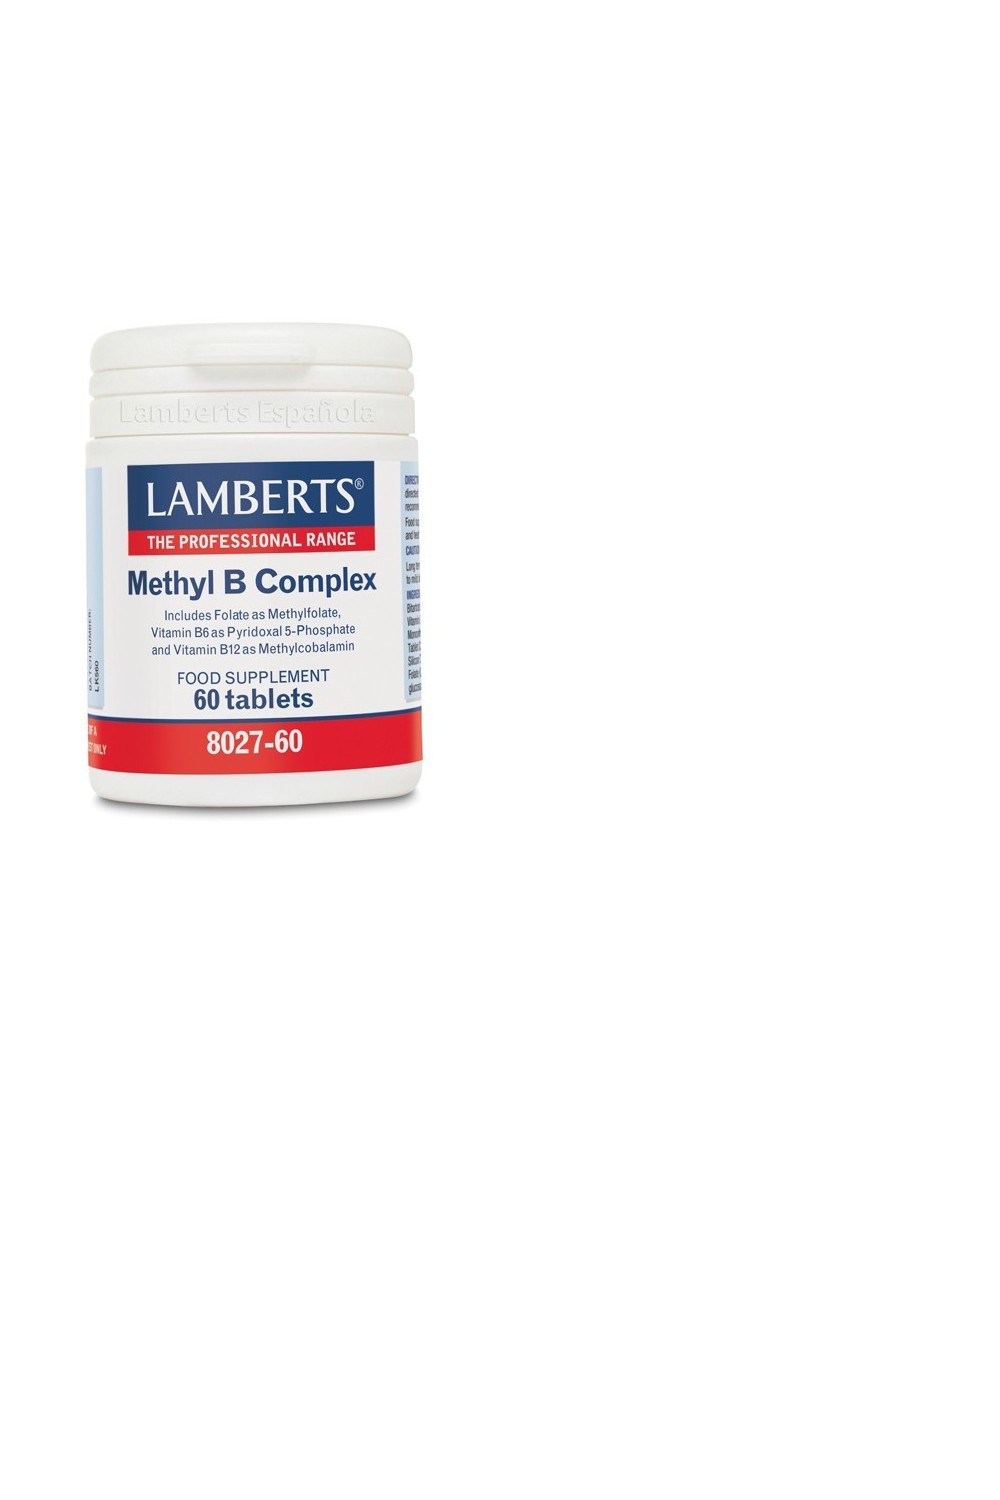 Lamberts Methyl B Complex 60